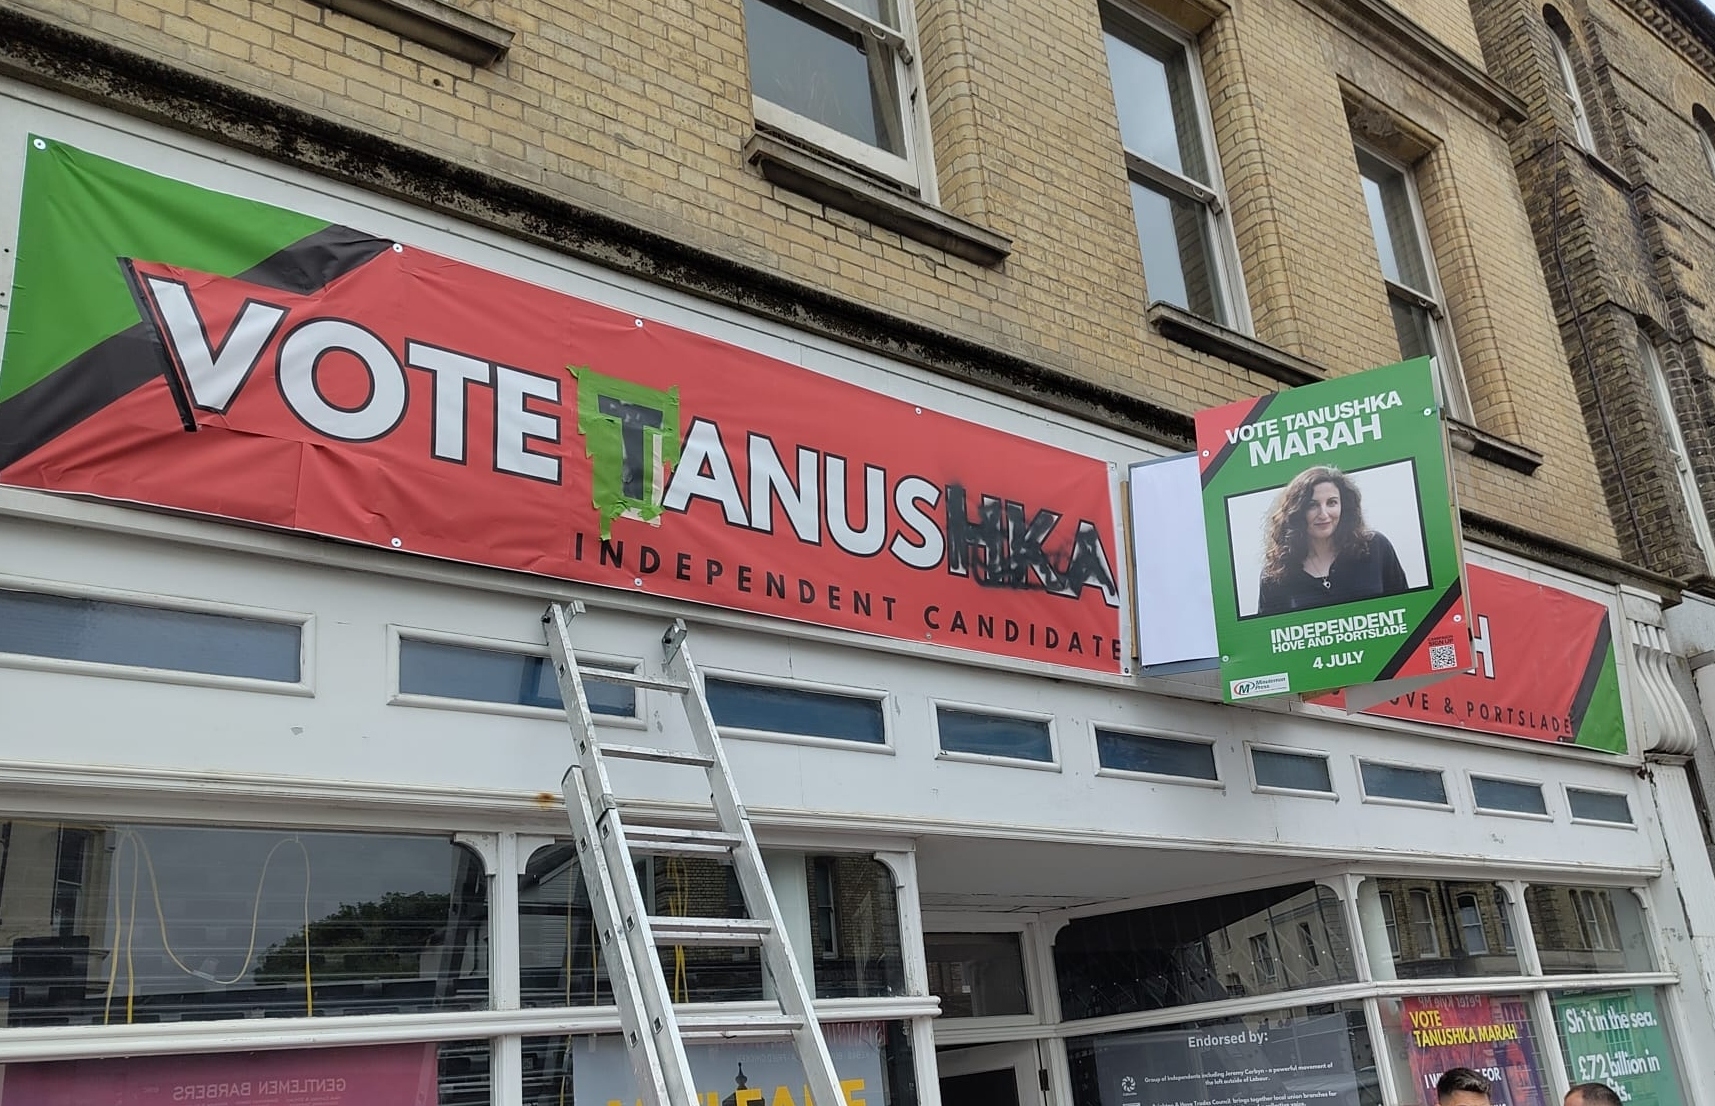 Tanushka Marah's campaign office was vandalised overnight on 3 July (Tanushka Marah)